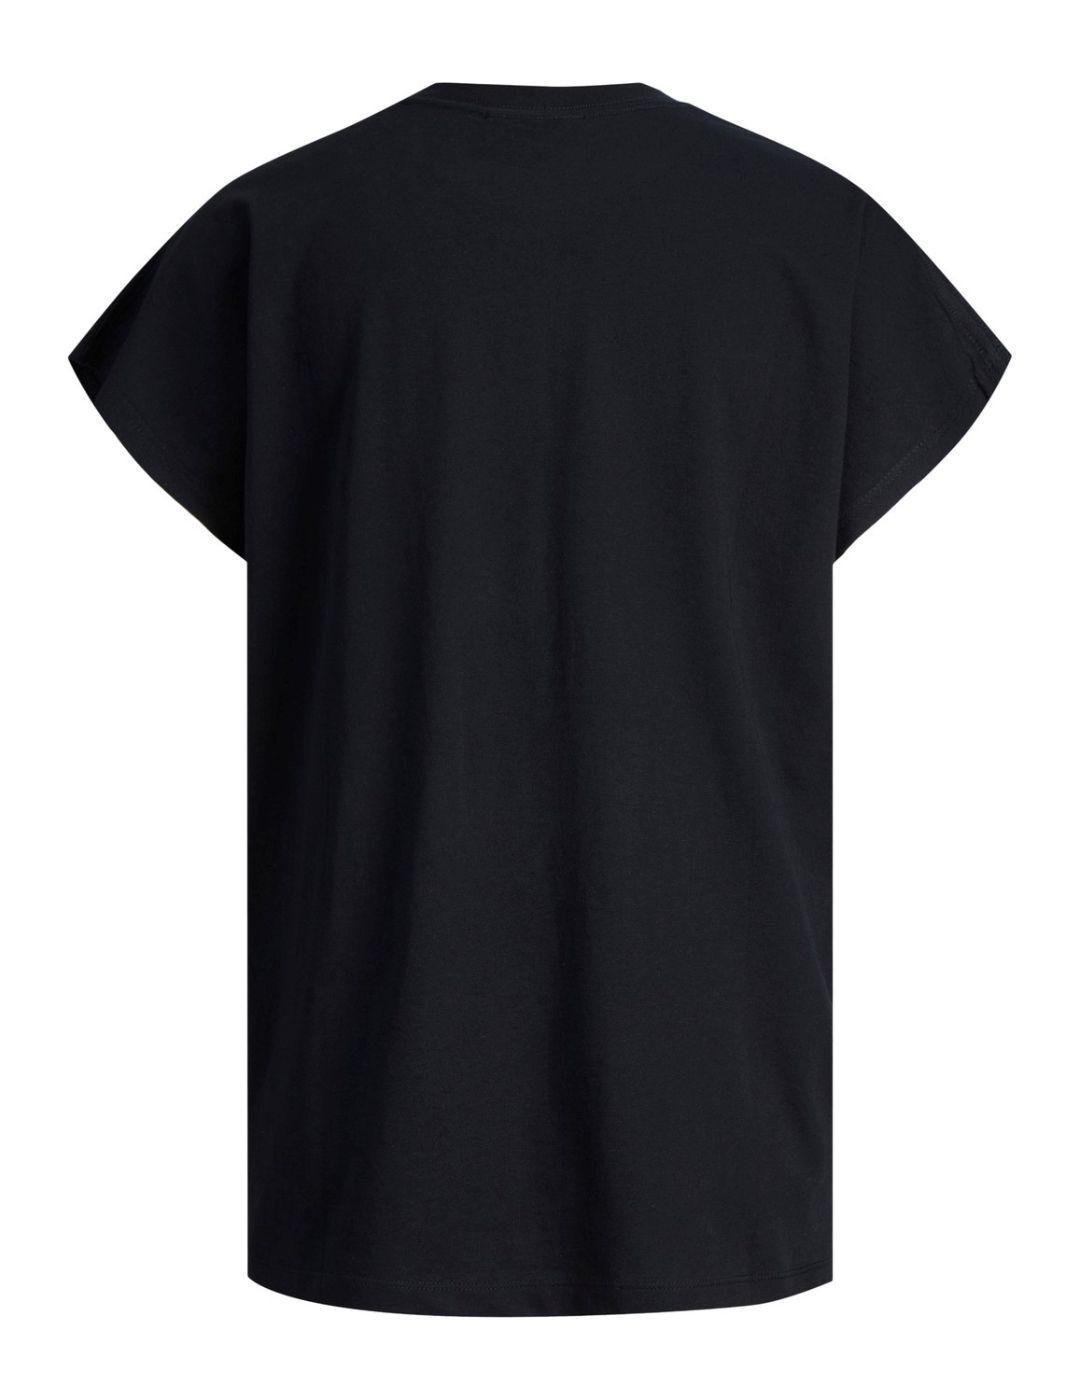 Camiseta JJXX astrid negra para mujer -b